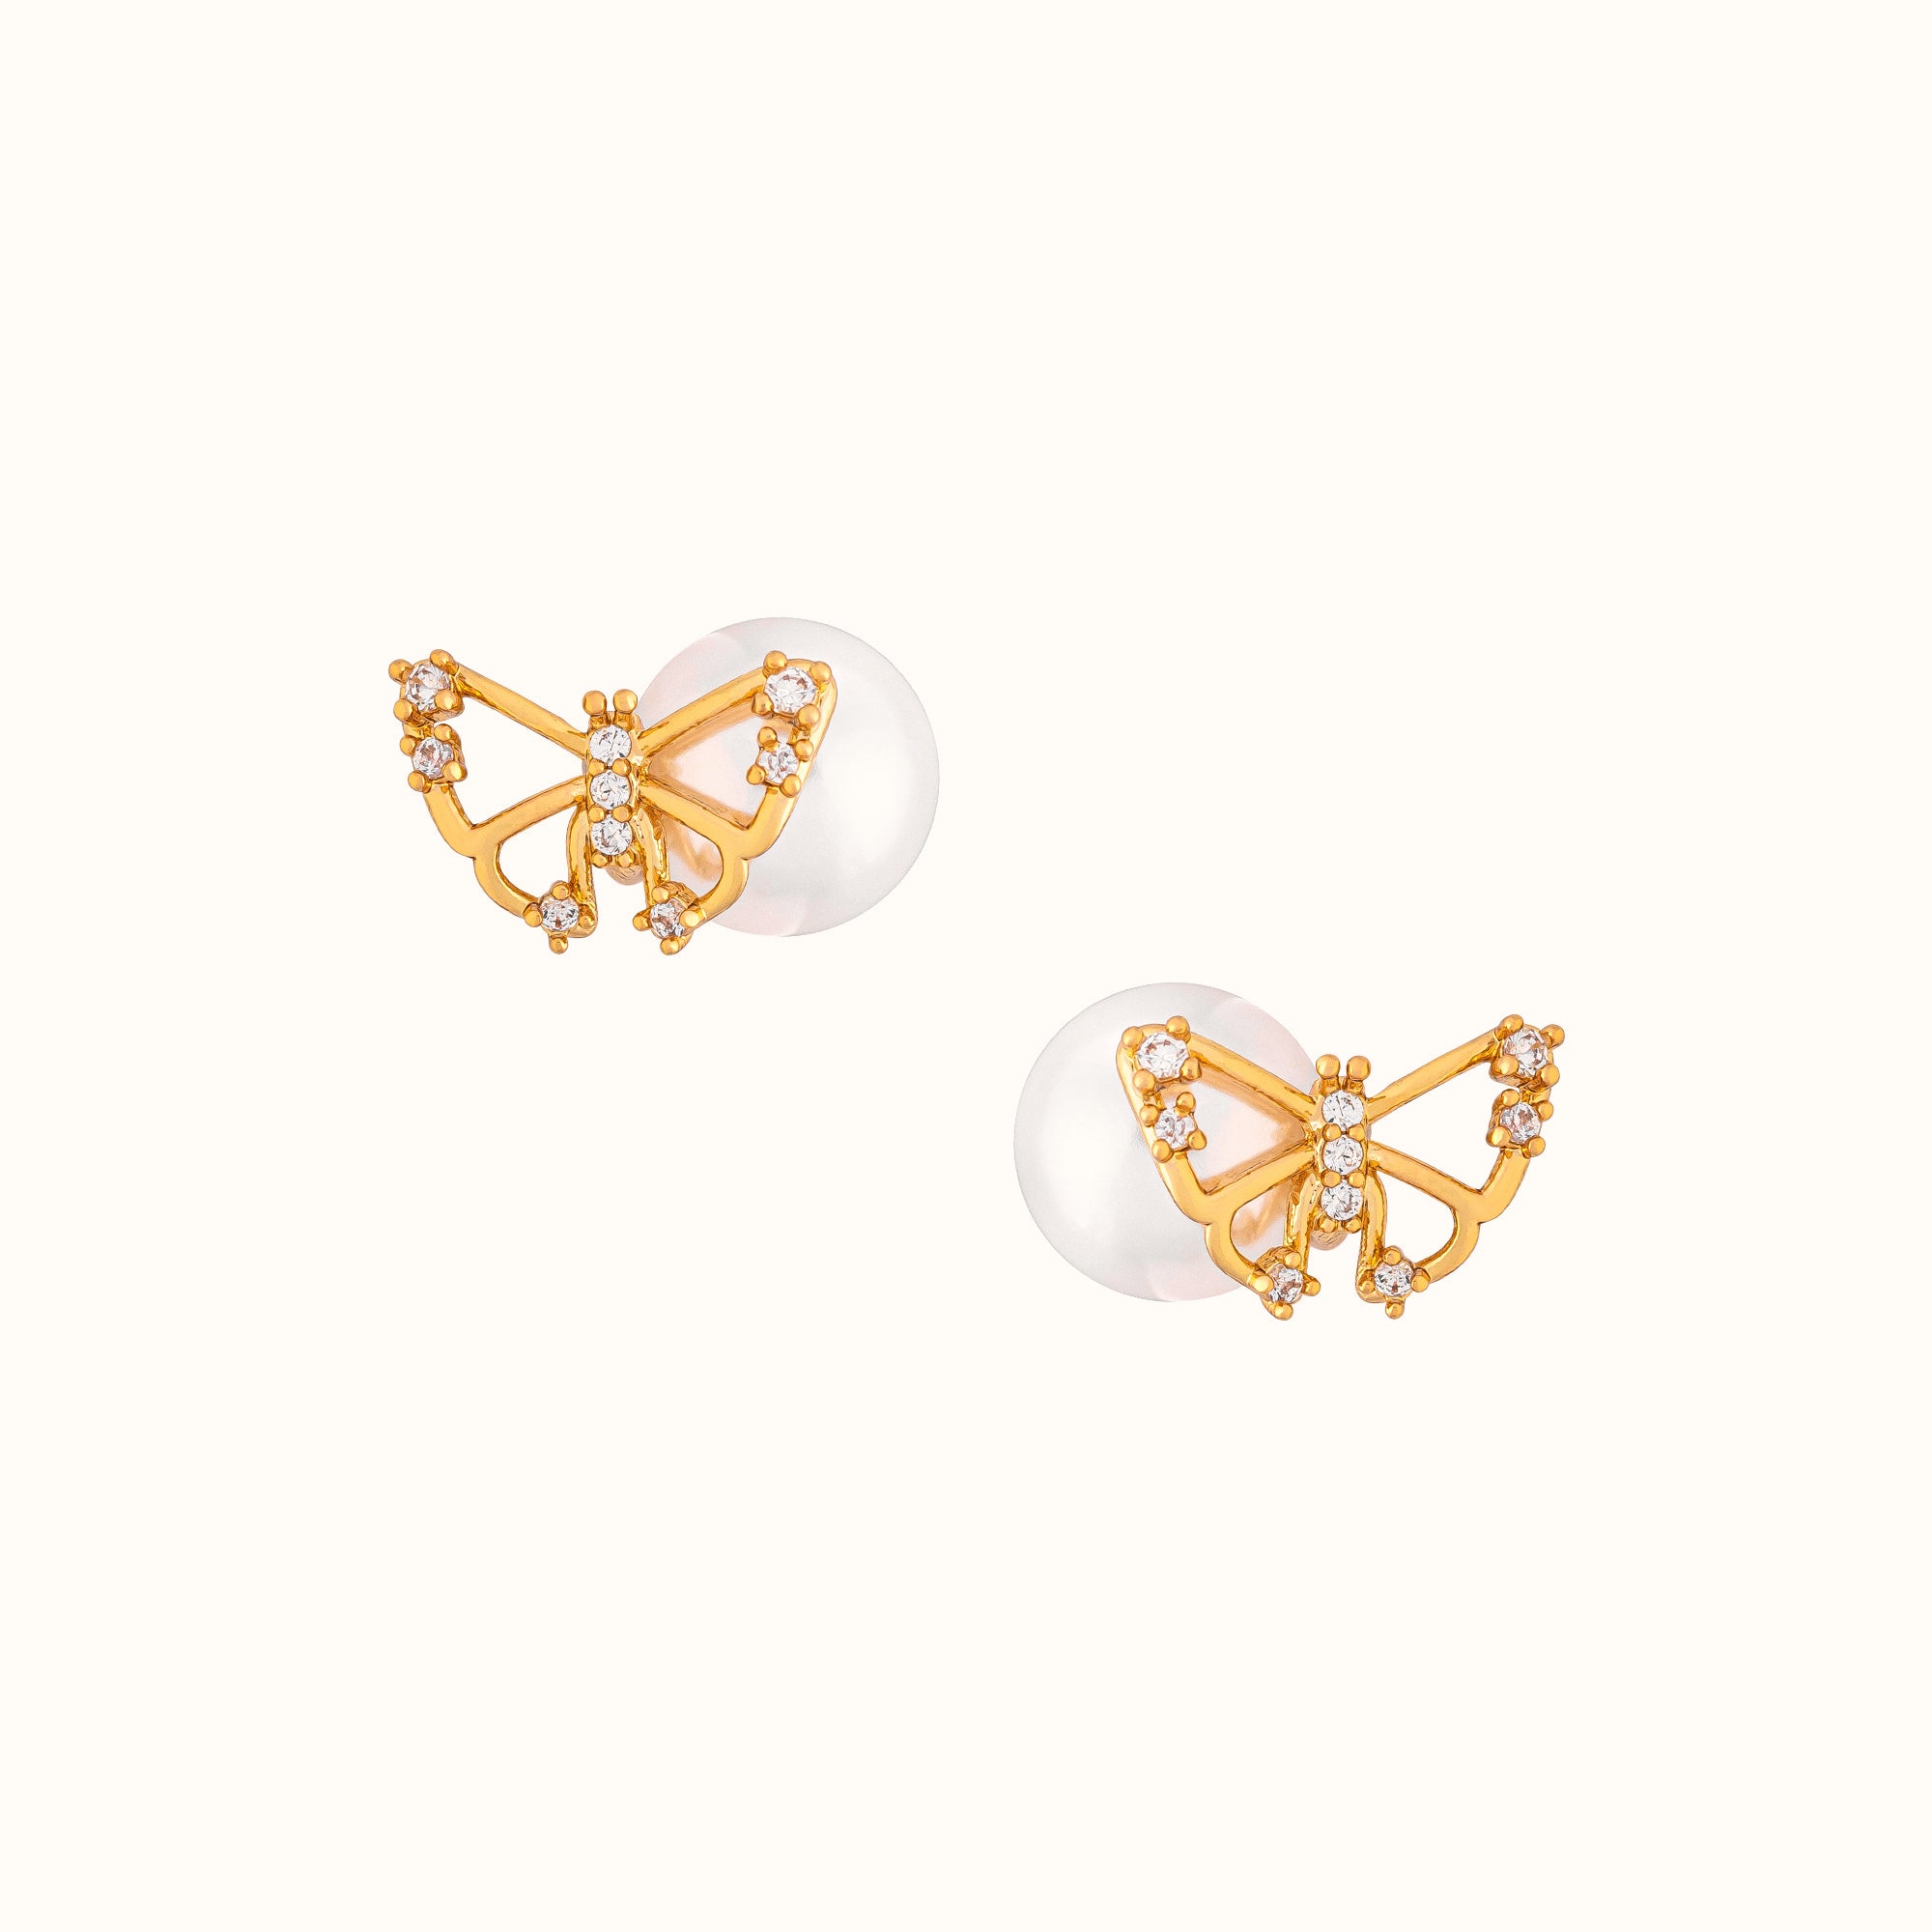 Flutter - alicia bonnie jewelry